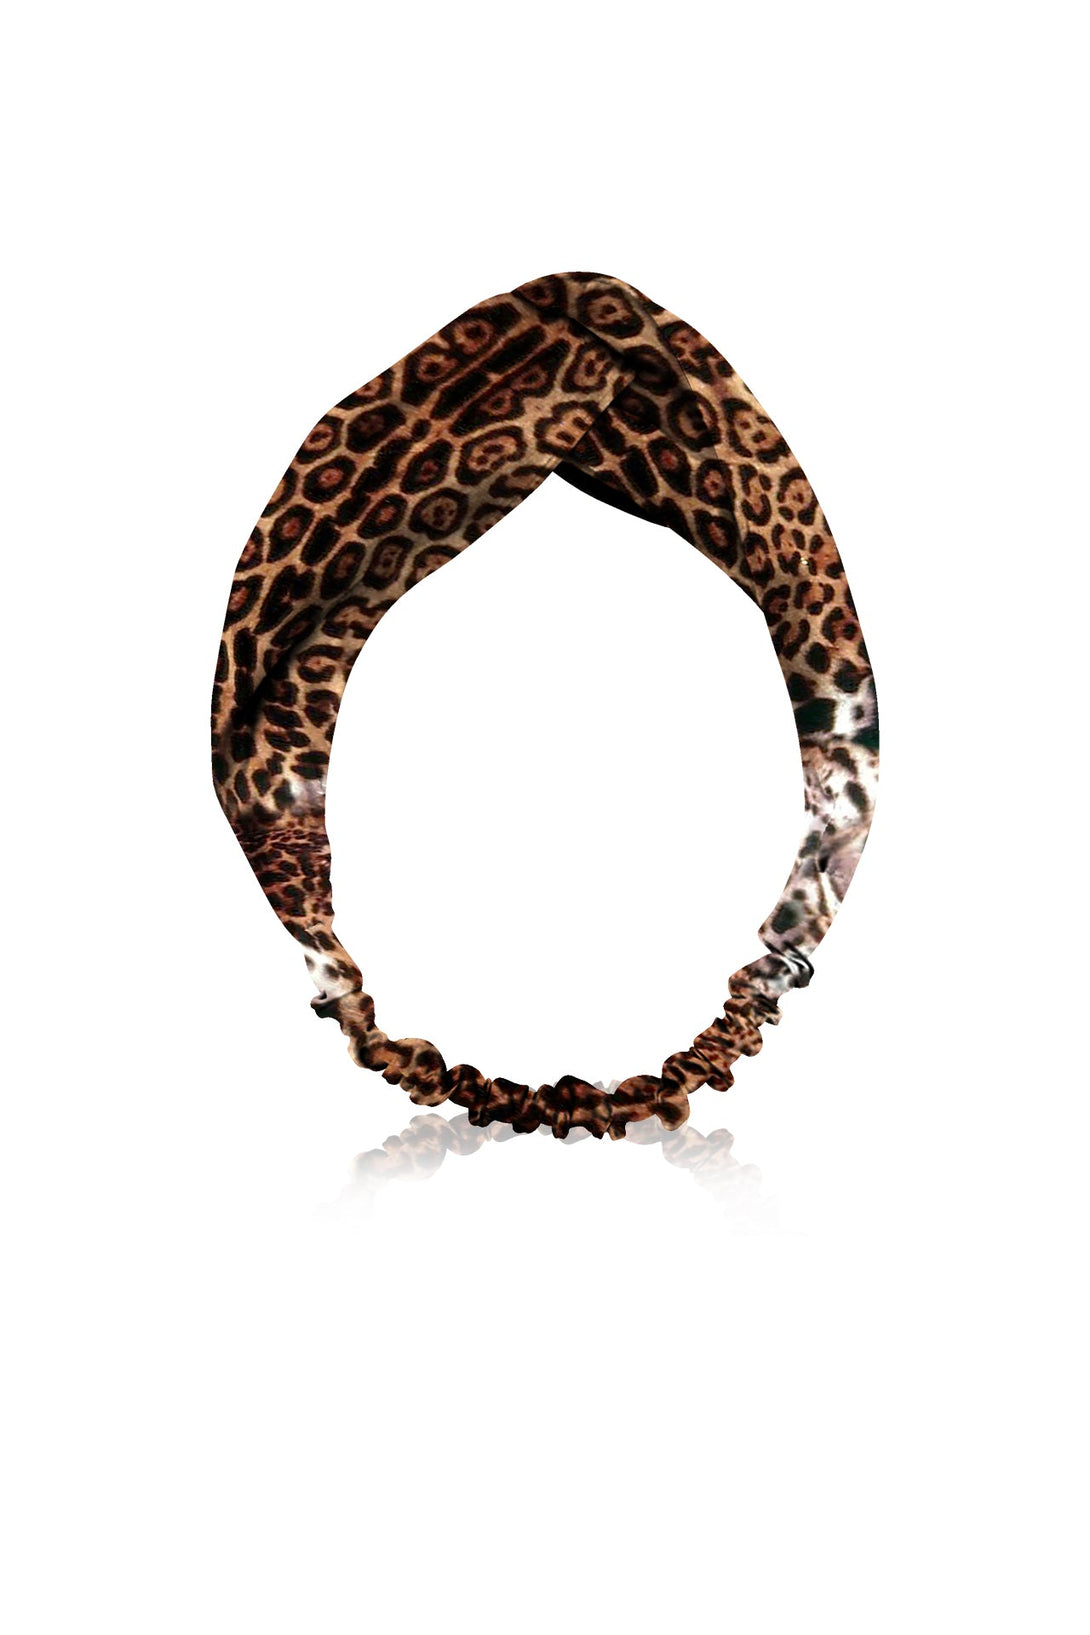 "headband leopard" "Shahida Parides" "printed headbands" "leopard headband"